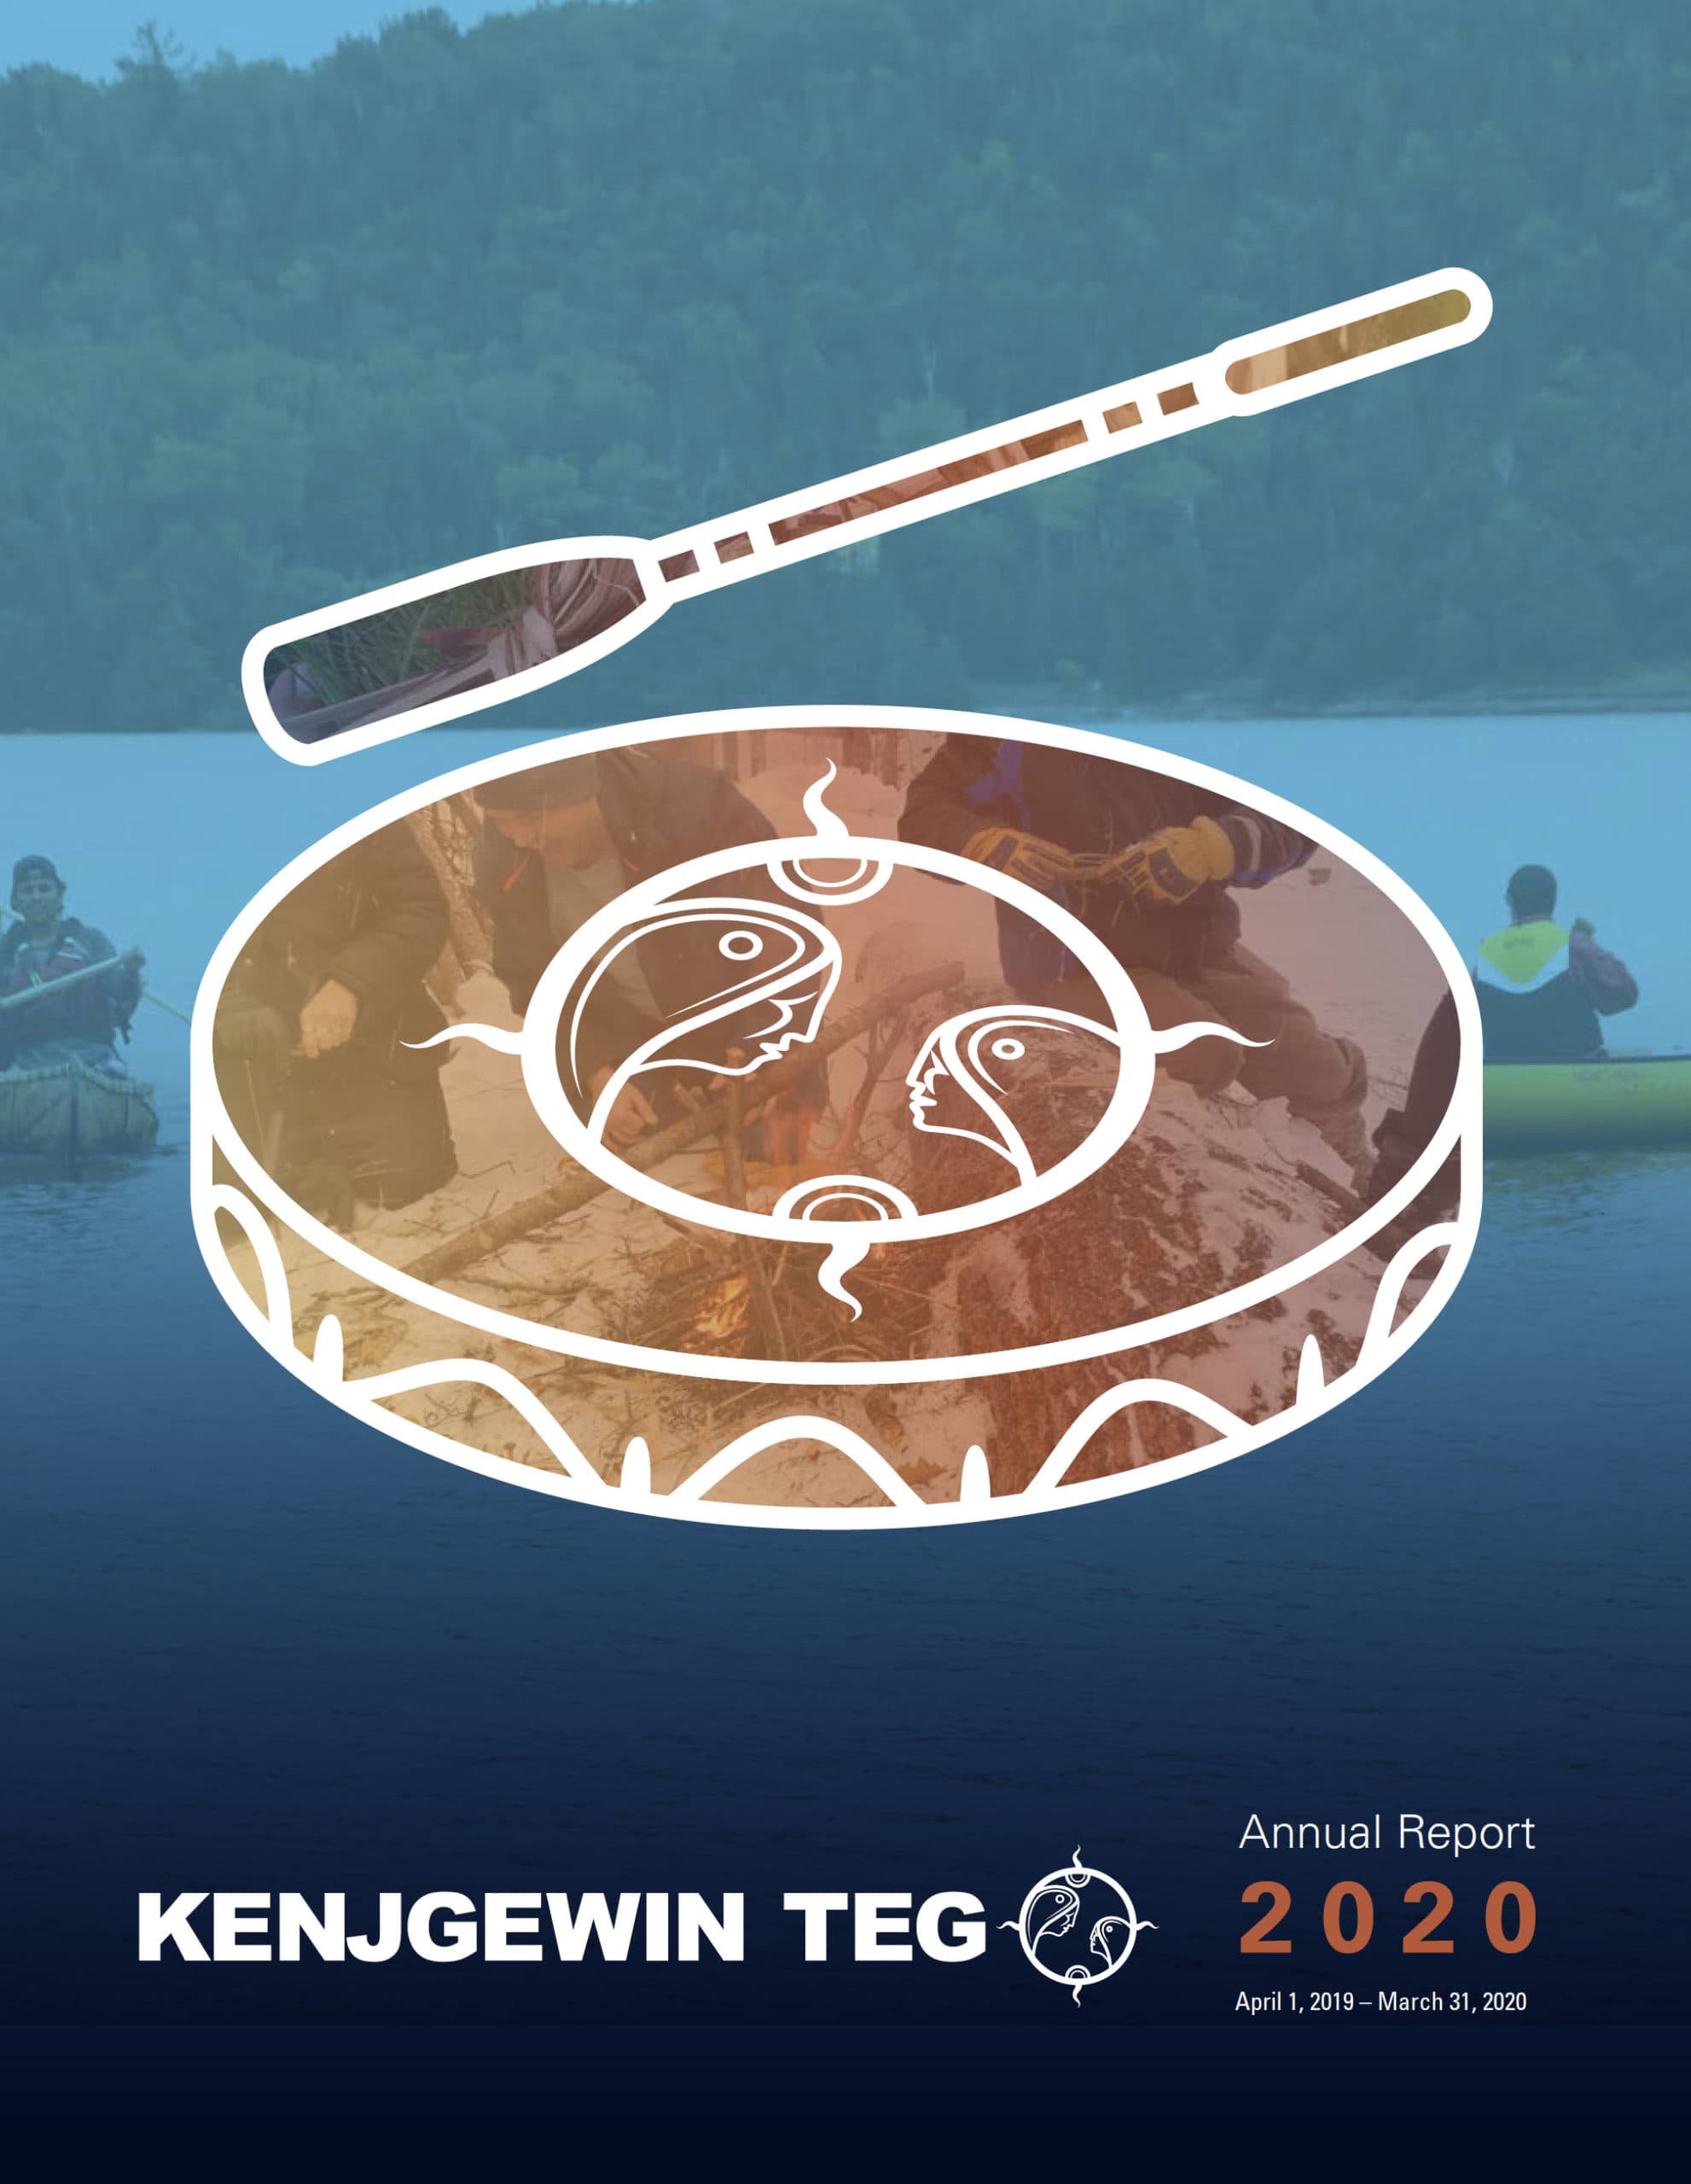 Kenjgewin Teg Annual Report 2020 cover